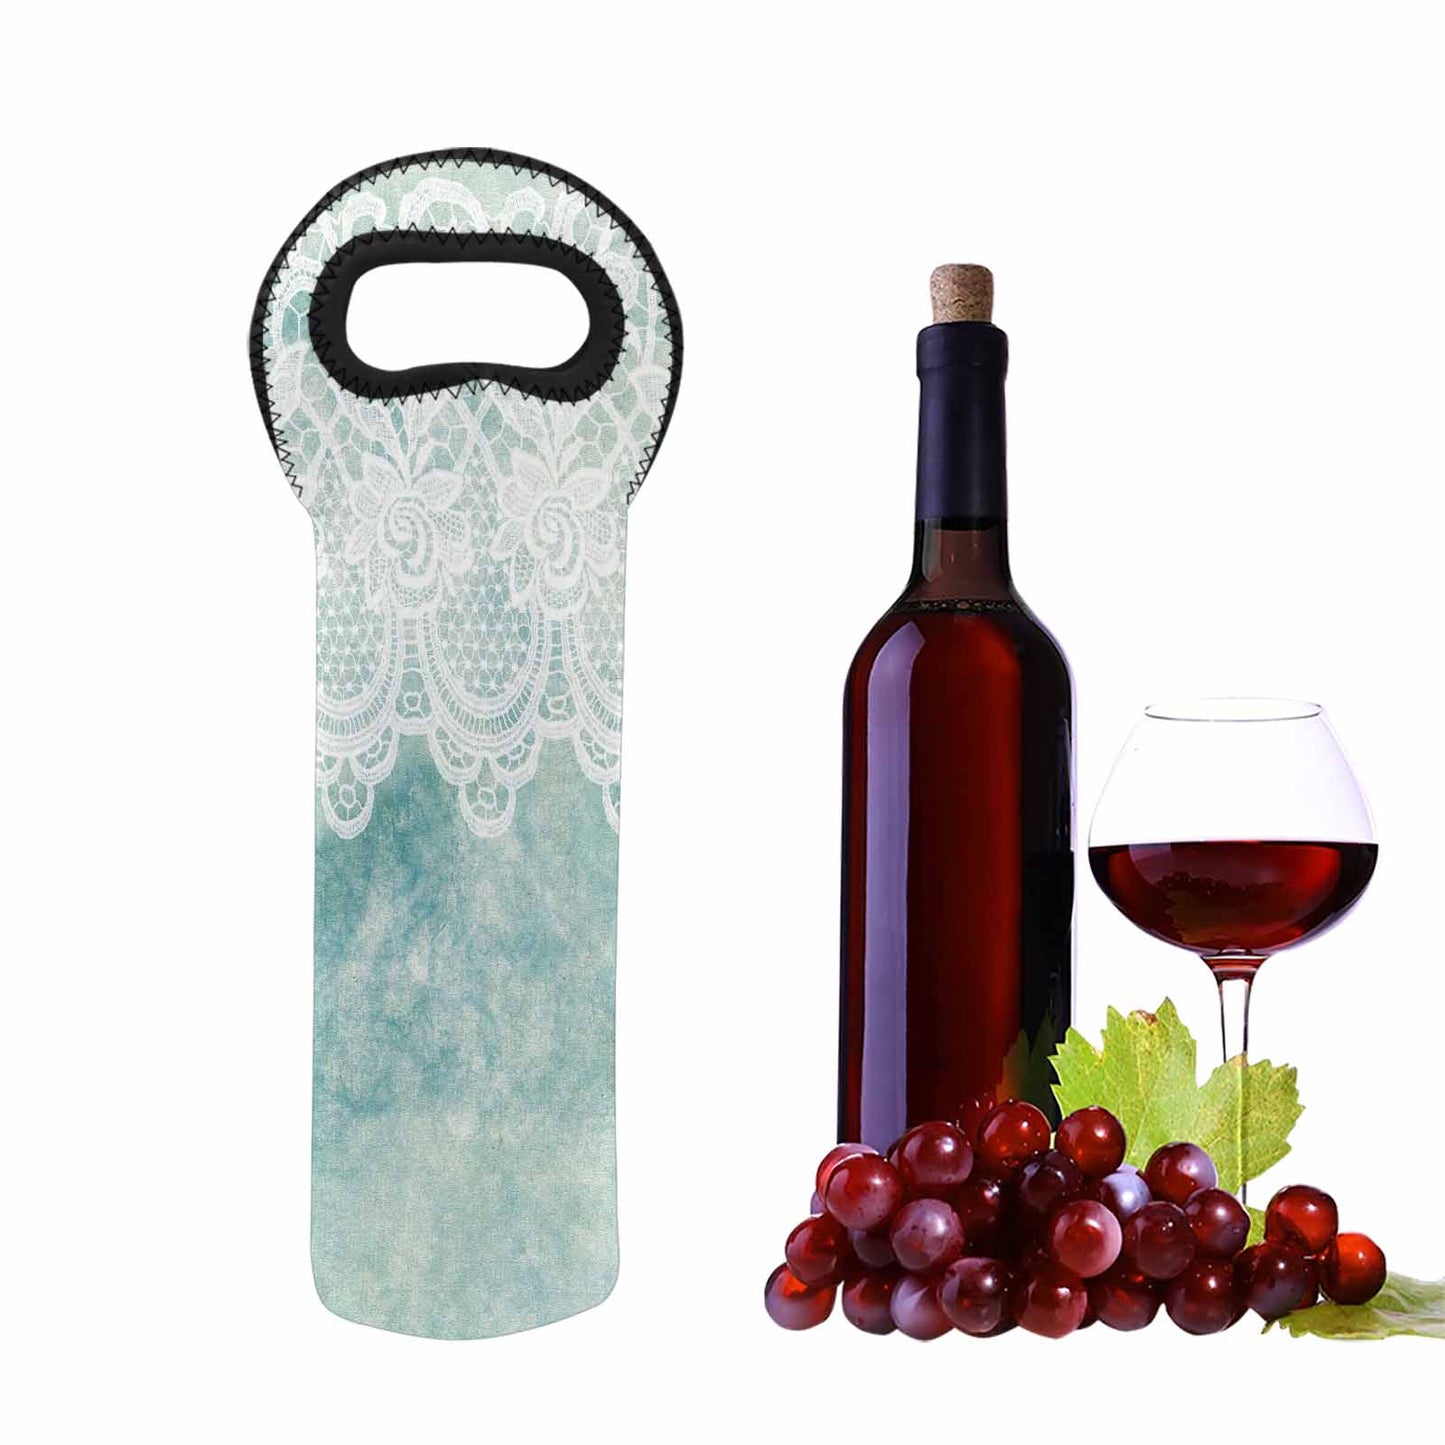 Victorian Lace 1 bottle wine bag, design 41